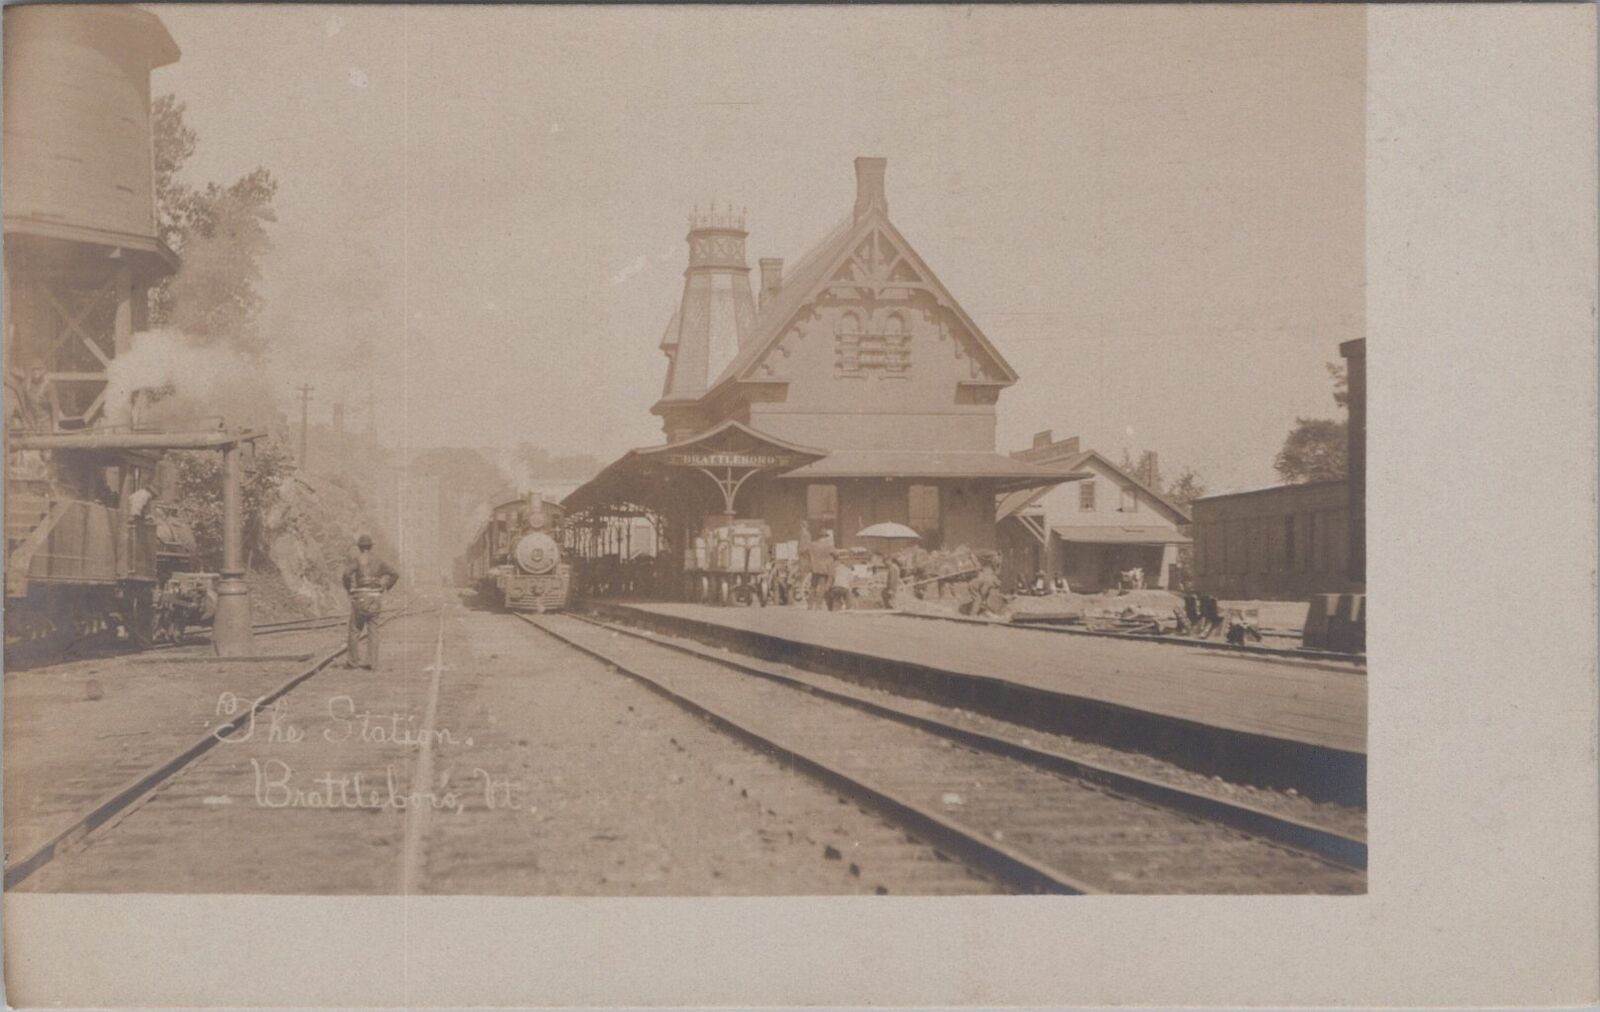 The Train Station Railroads Brattleboro Vermont c1900s RPPC Postcard